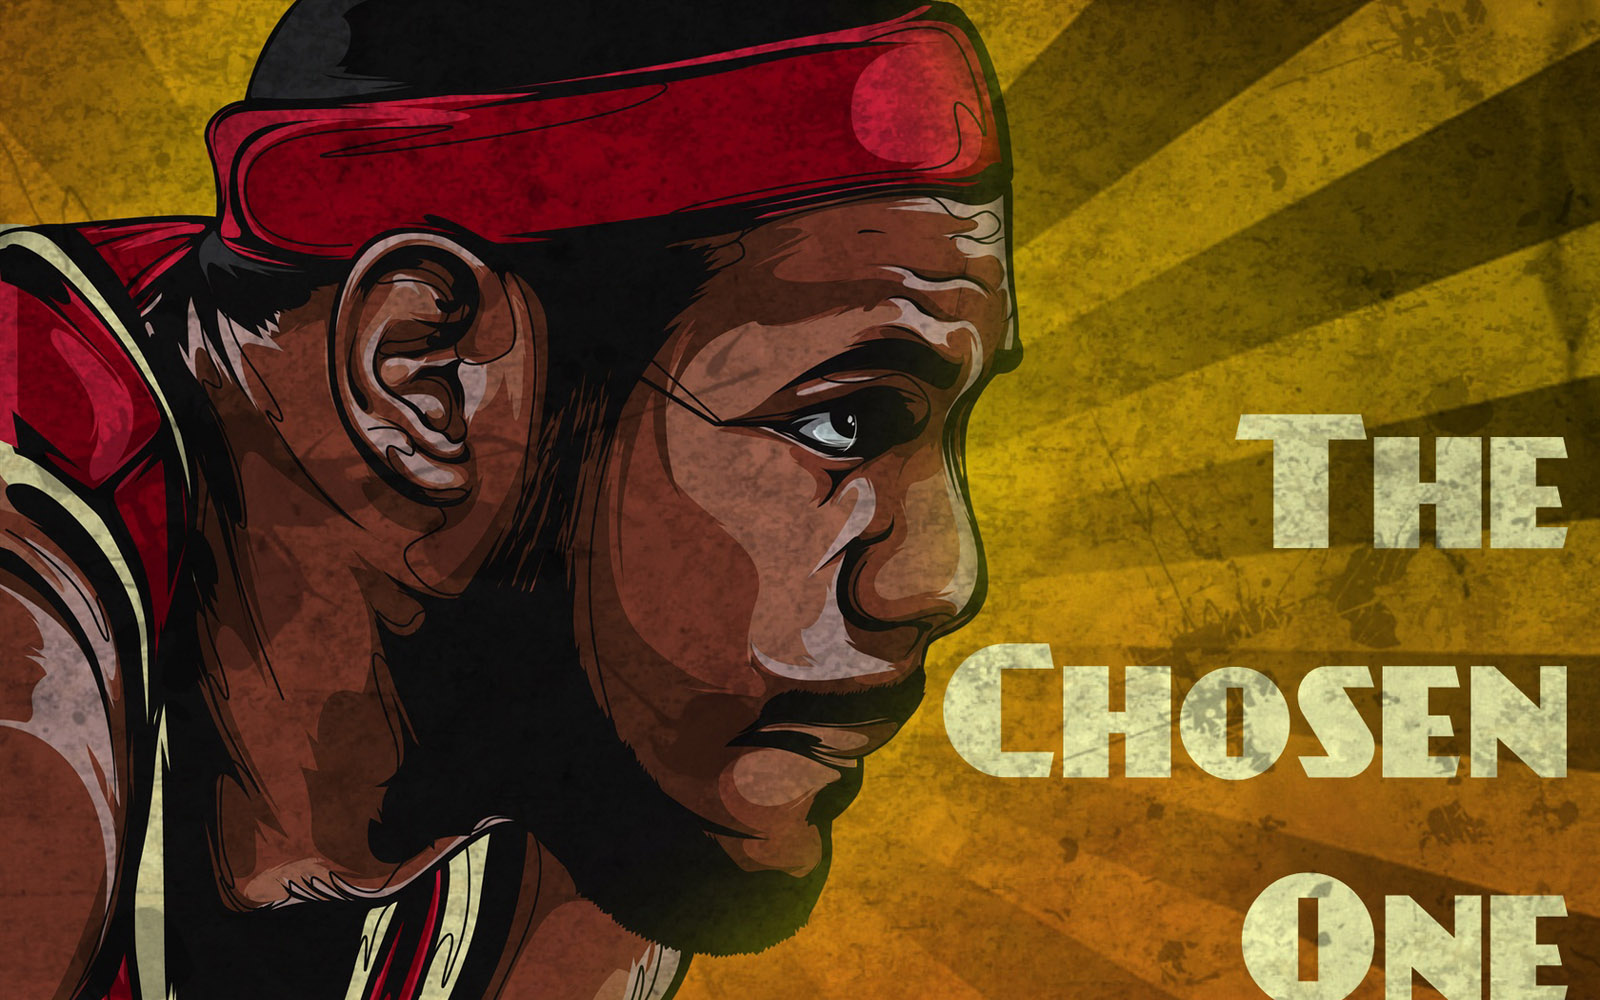 Miami-Heat-2012-NBA-Champions-Roster-Wallpaper-BasketWallp…